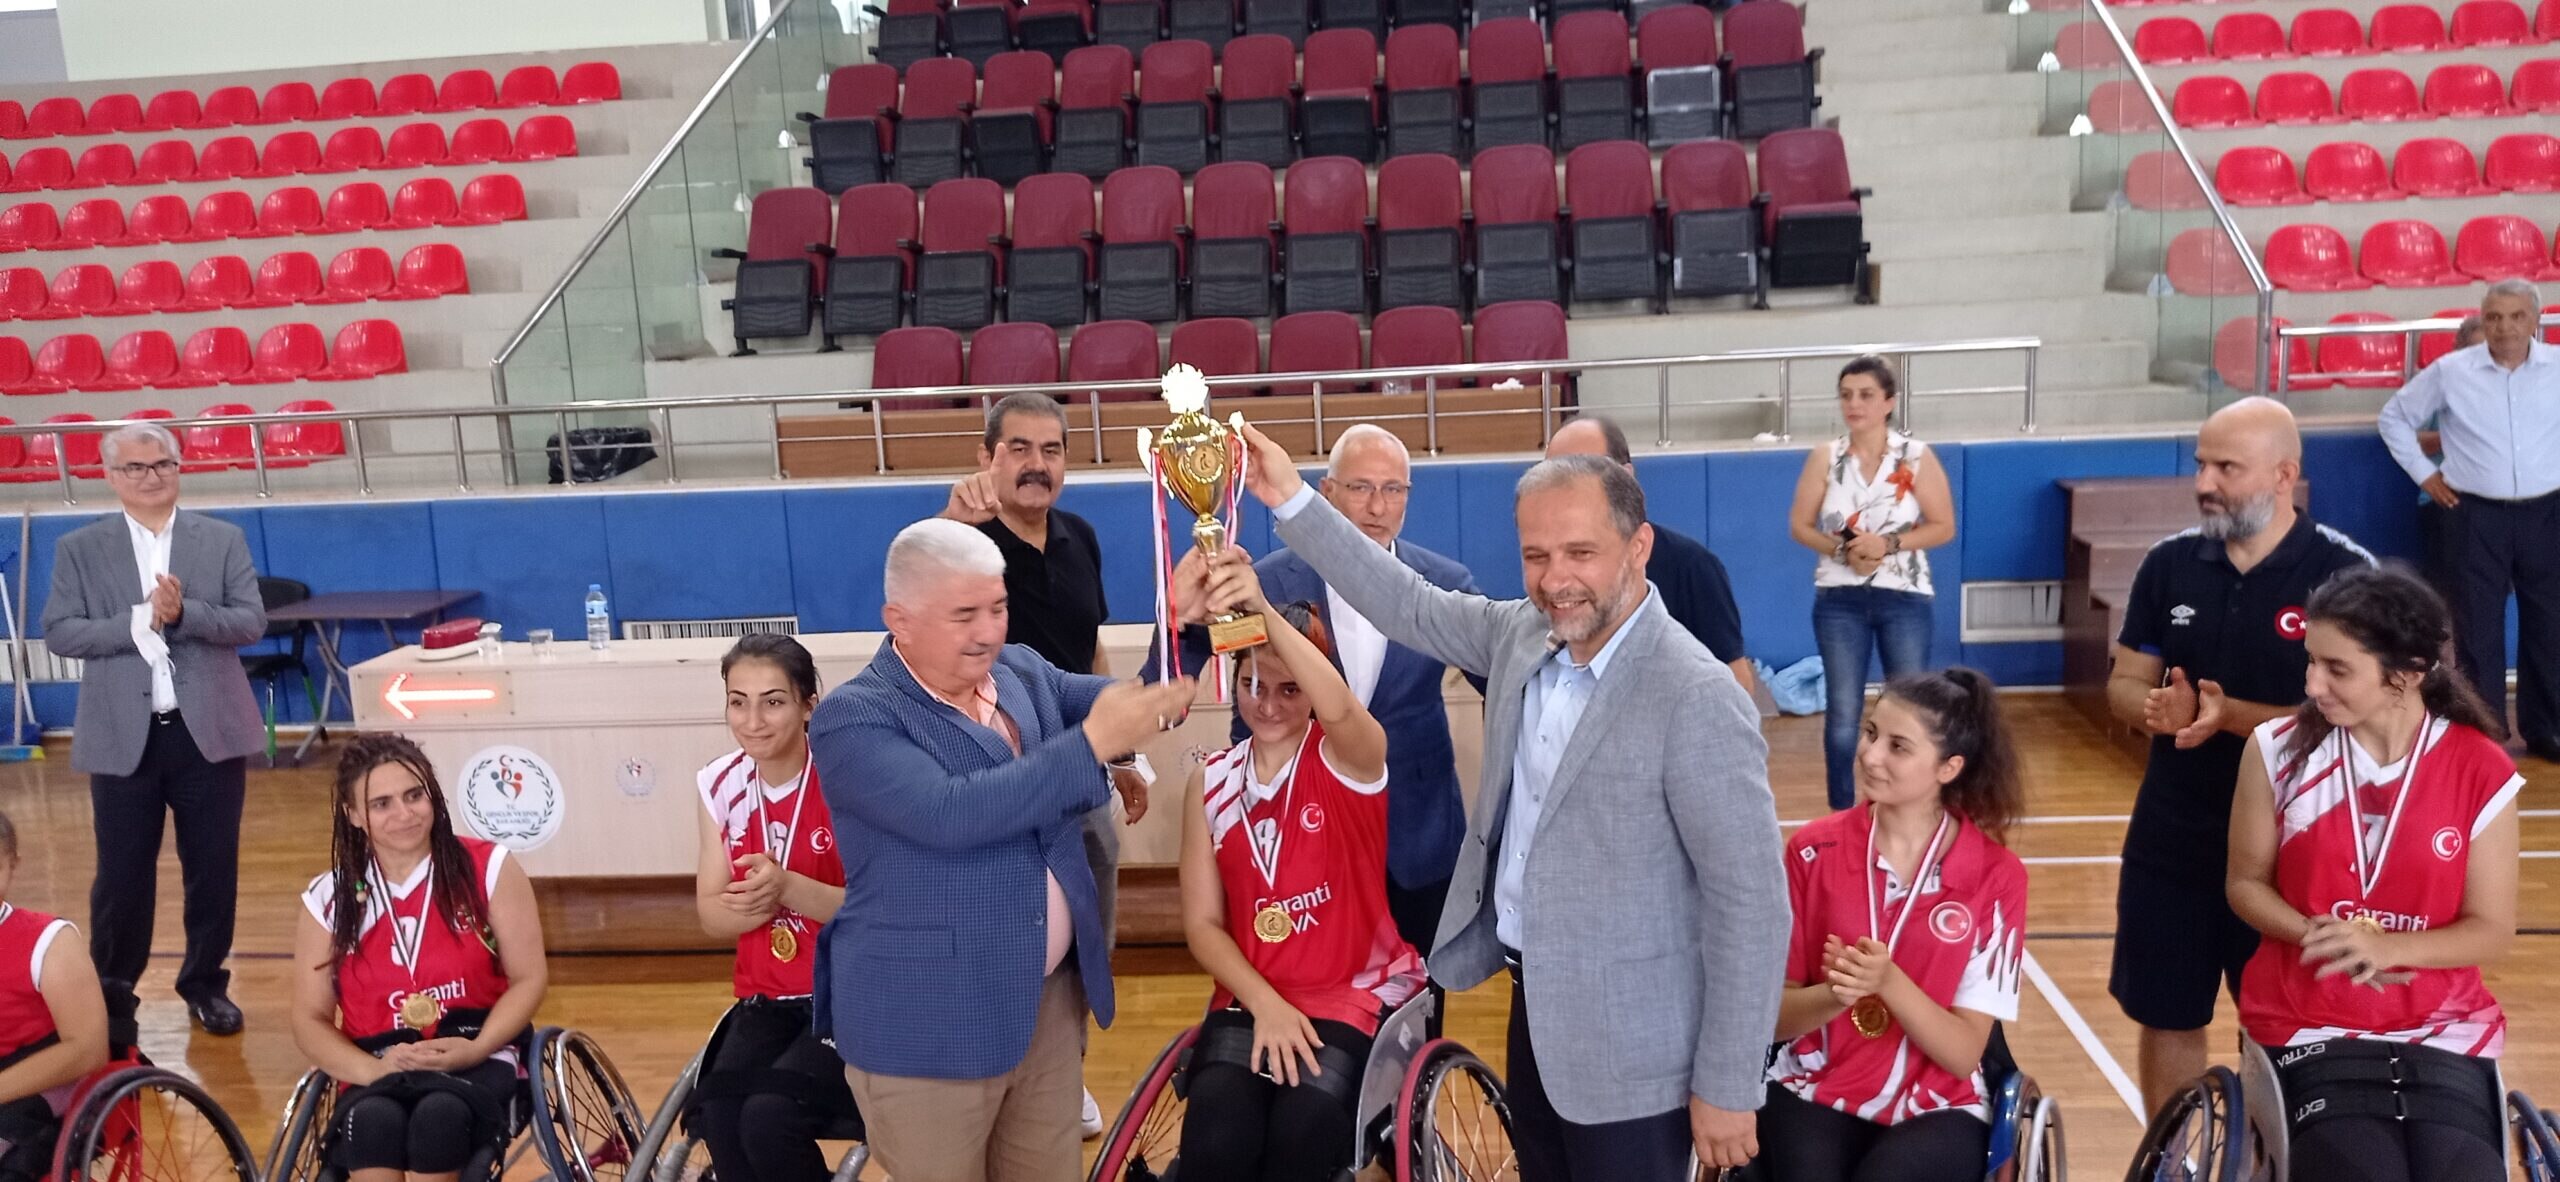 The Wheelchair Basketball Women's Turkey Championship